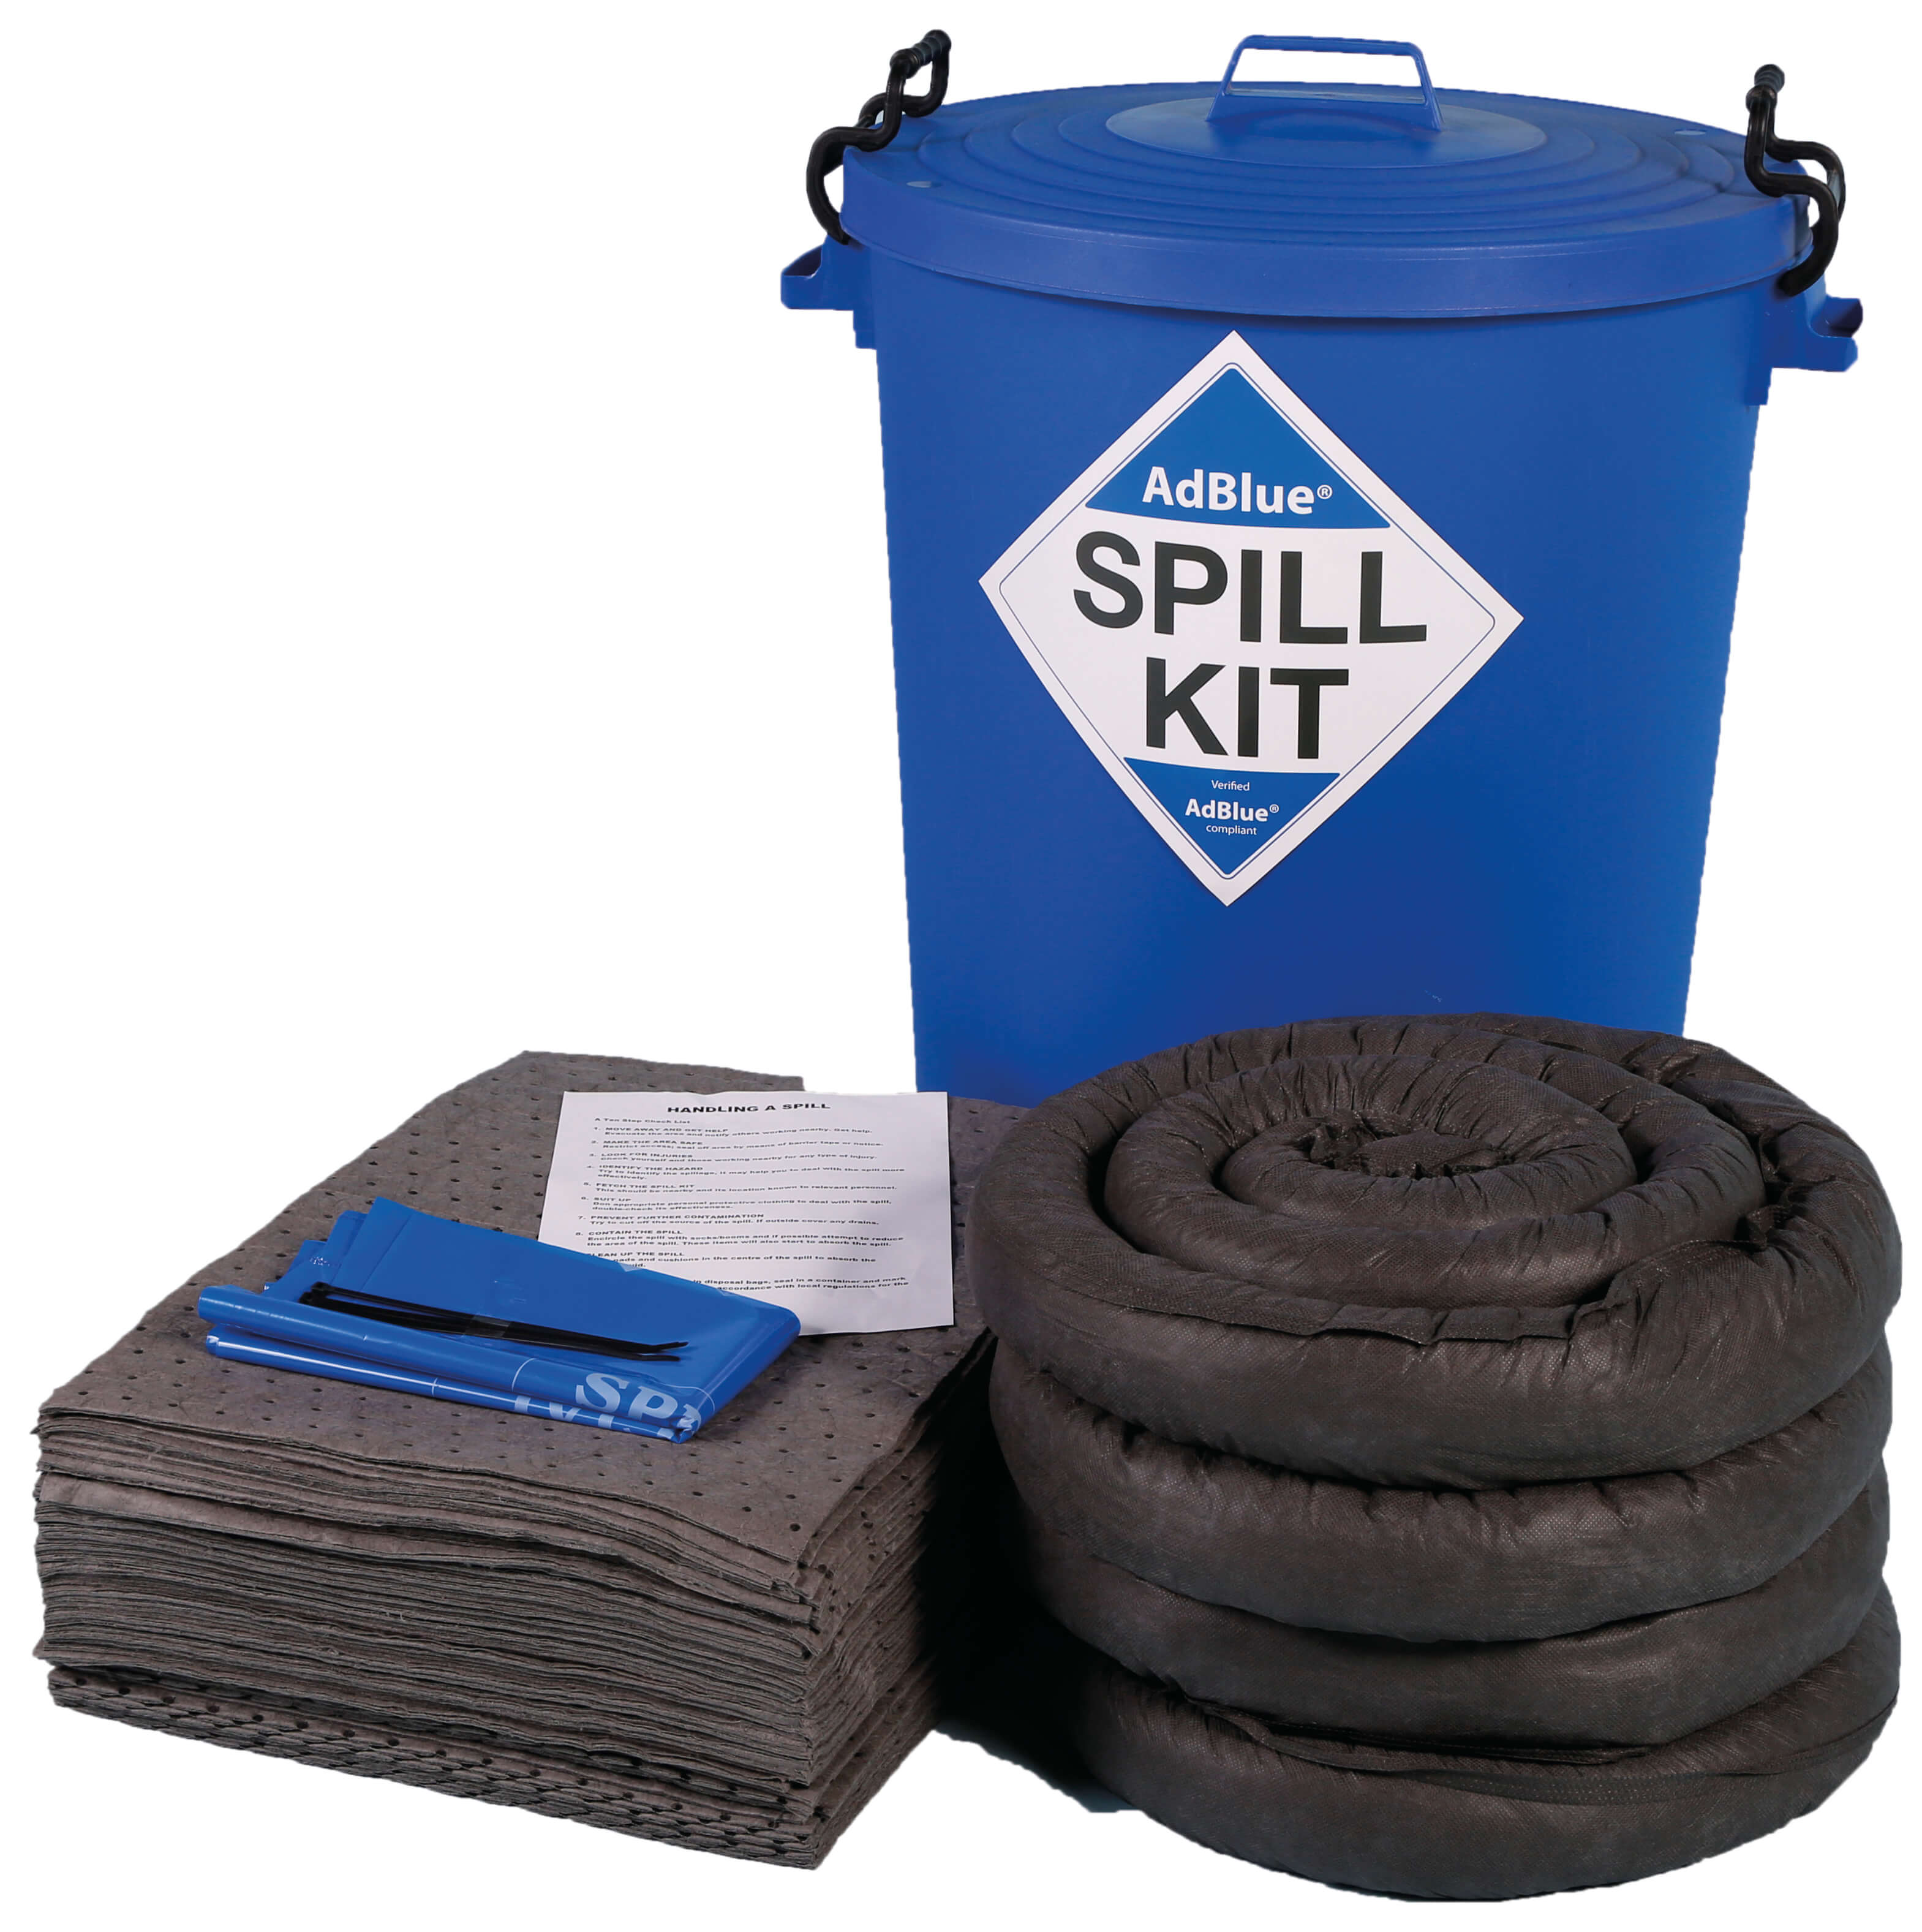 100 litre AdBlue spill kit in blue round bin